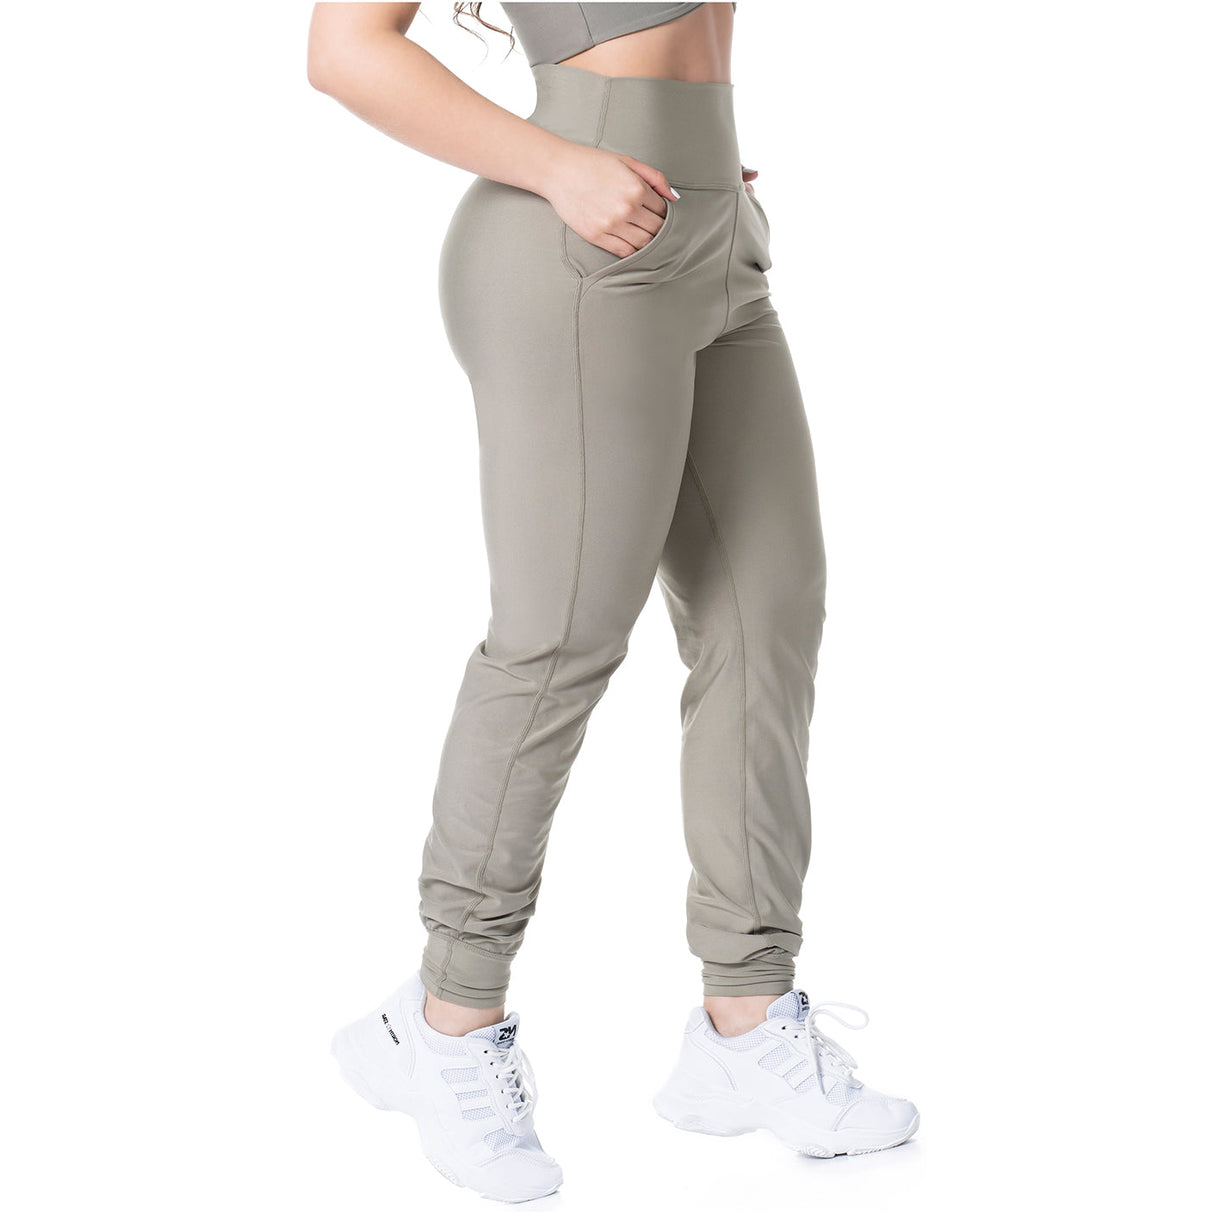 Lole pants jogger stretch active wear size medium running yoga